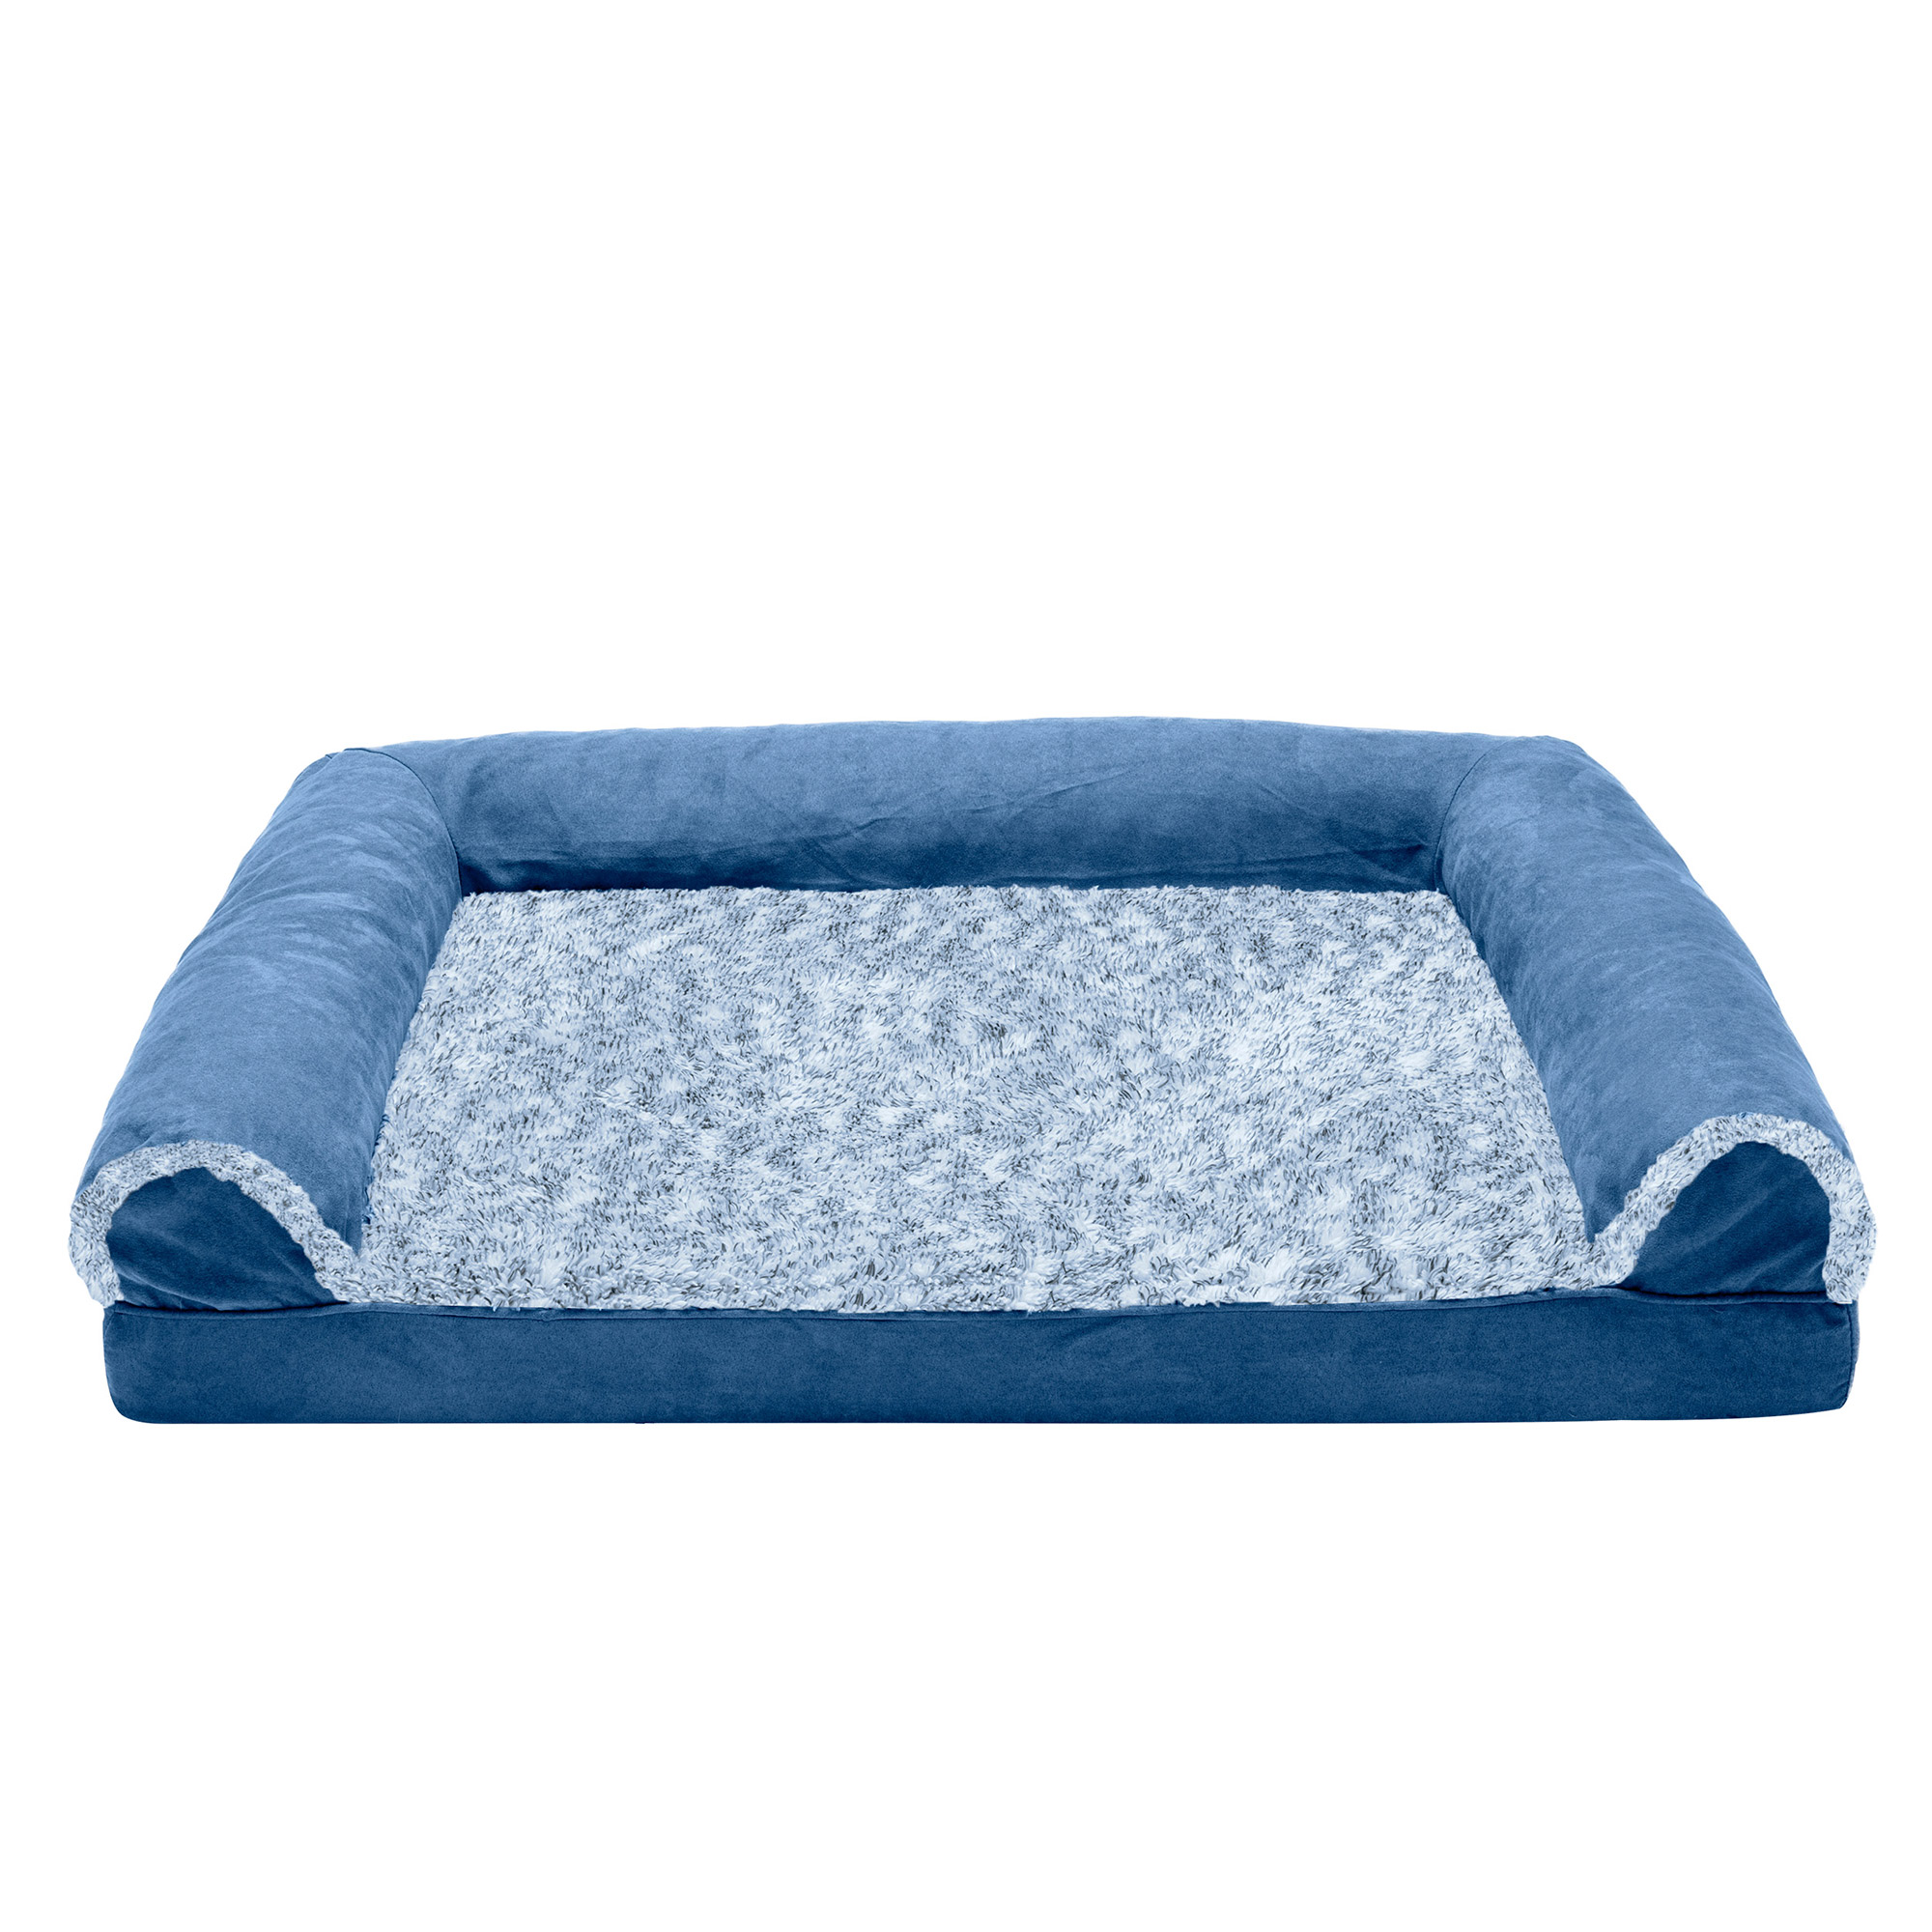 Organic Dog Bed by Avocado - Large/ X-Large - Mailman Blue